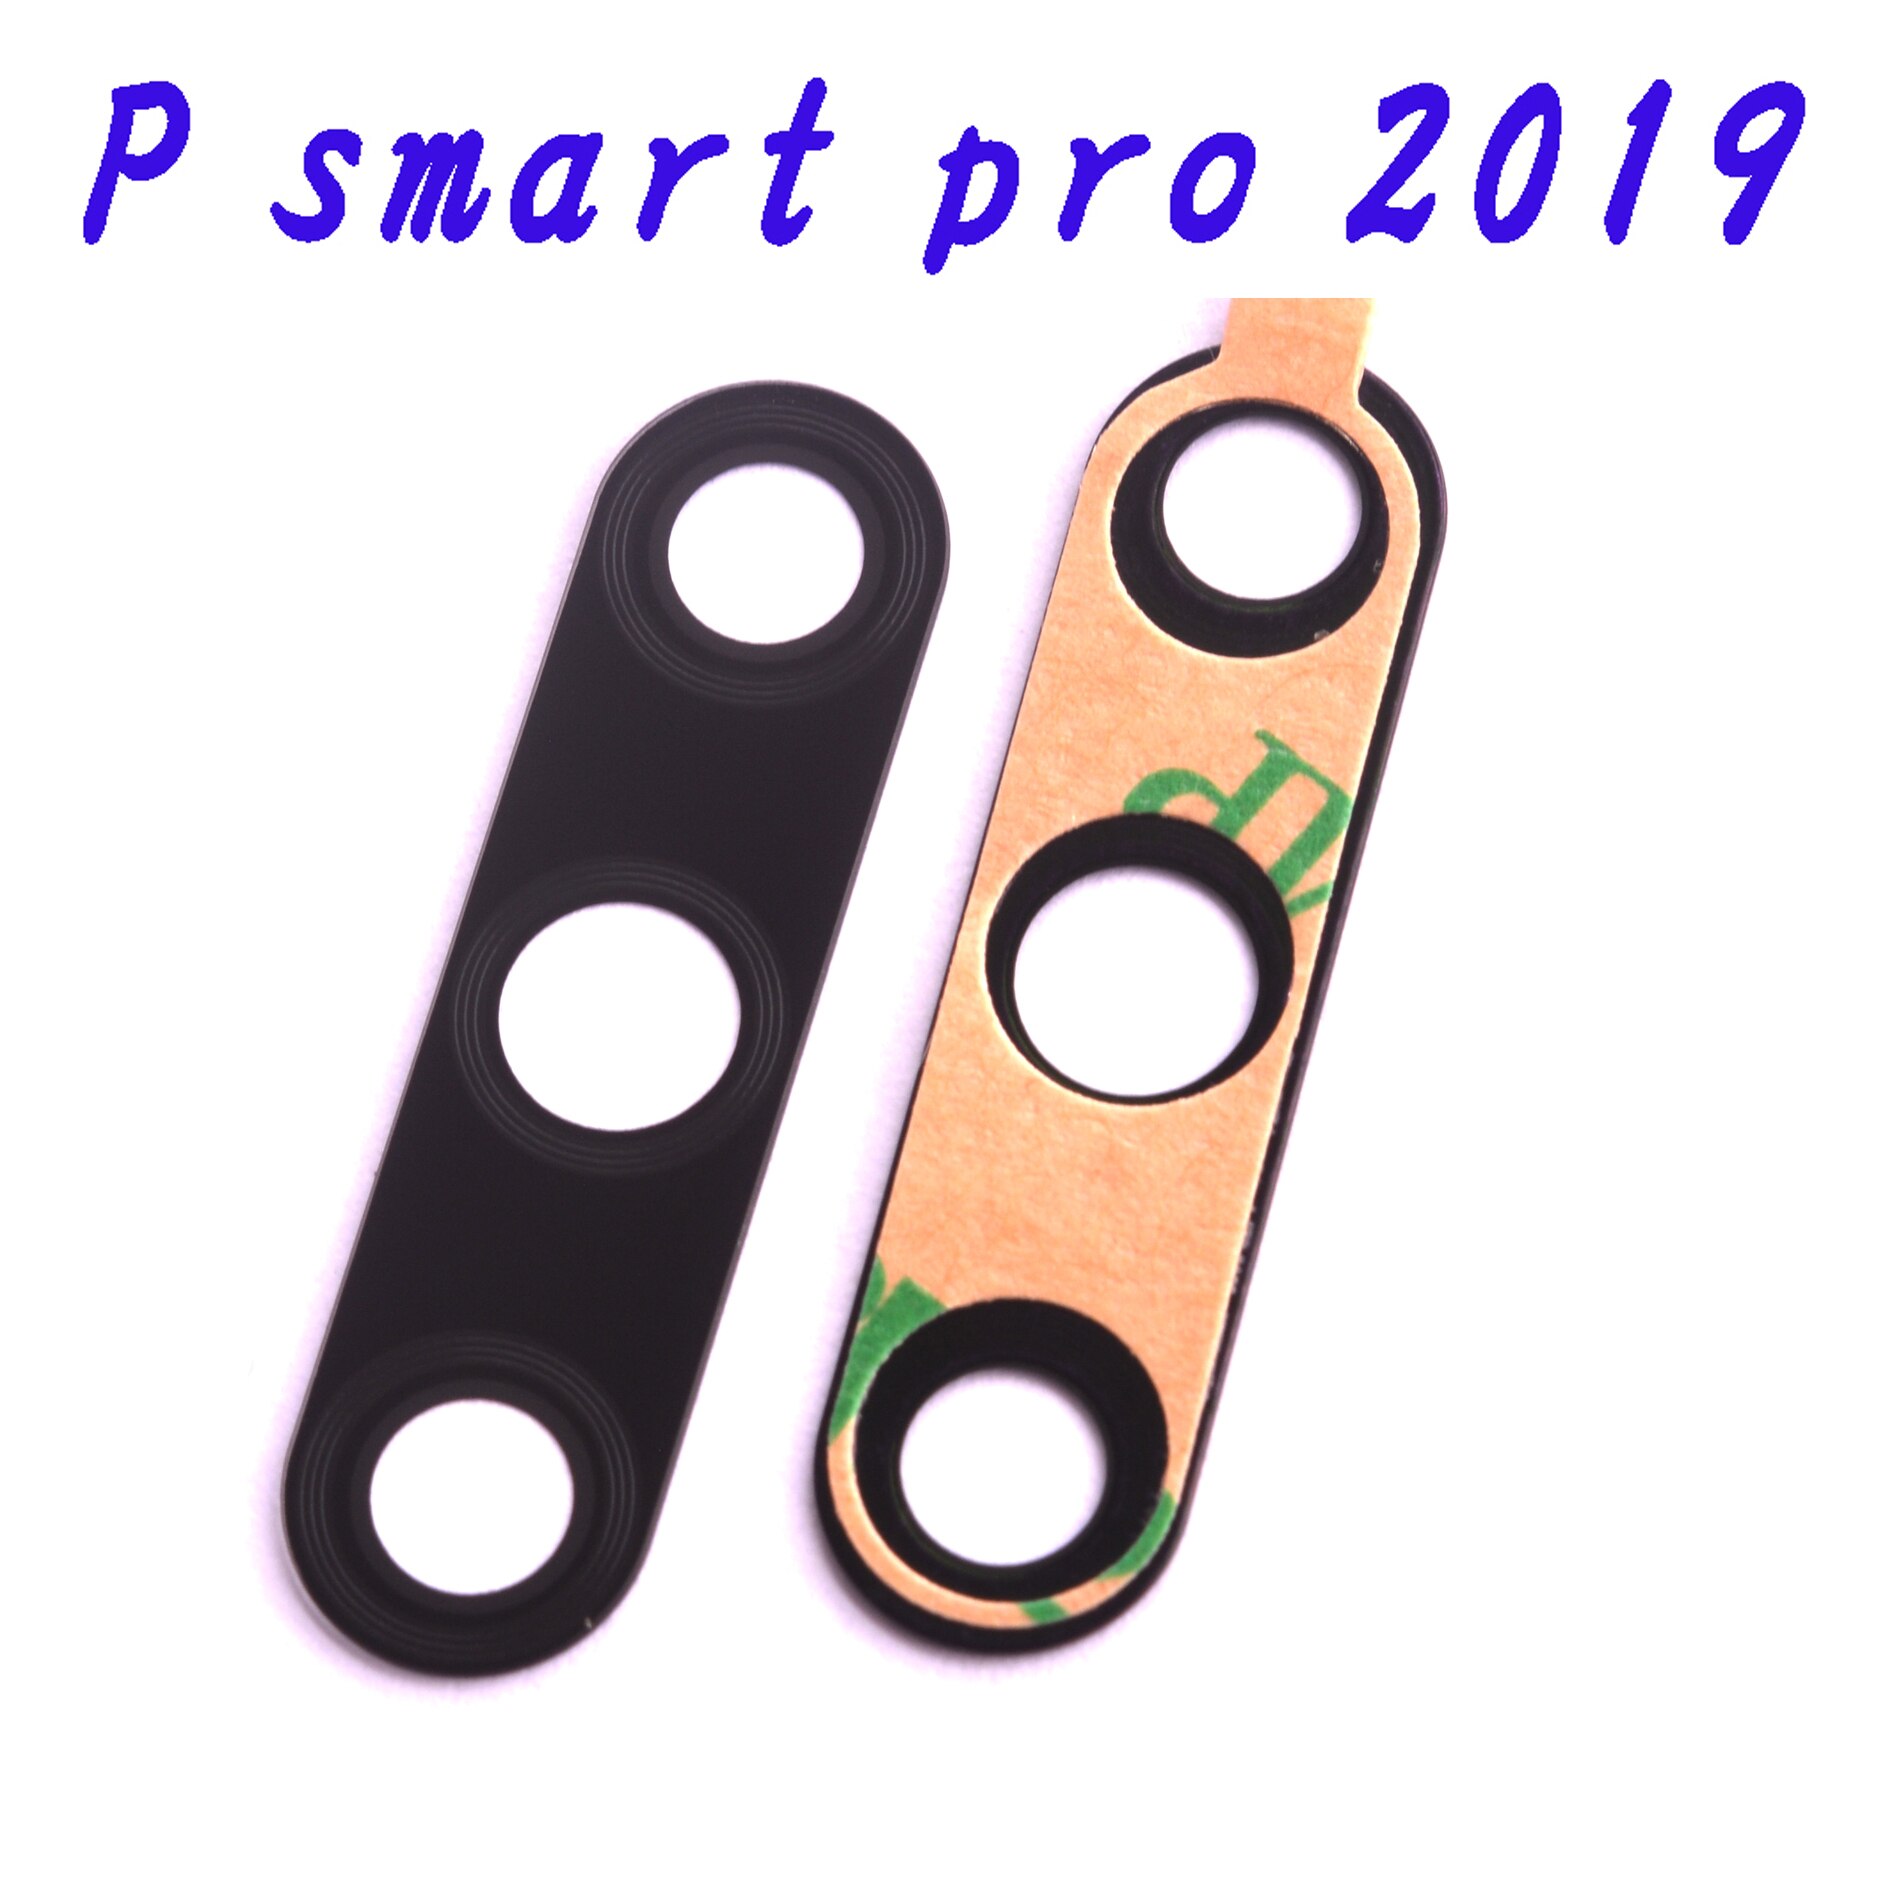 For p smart pro alkuperäinen takakameran lasilinssi huaweille p smart + p smart +: P smart pro 2019